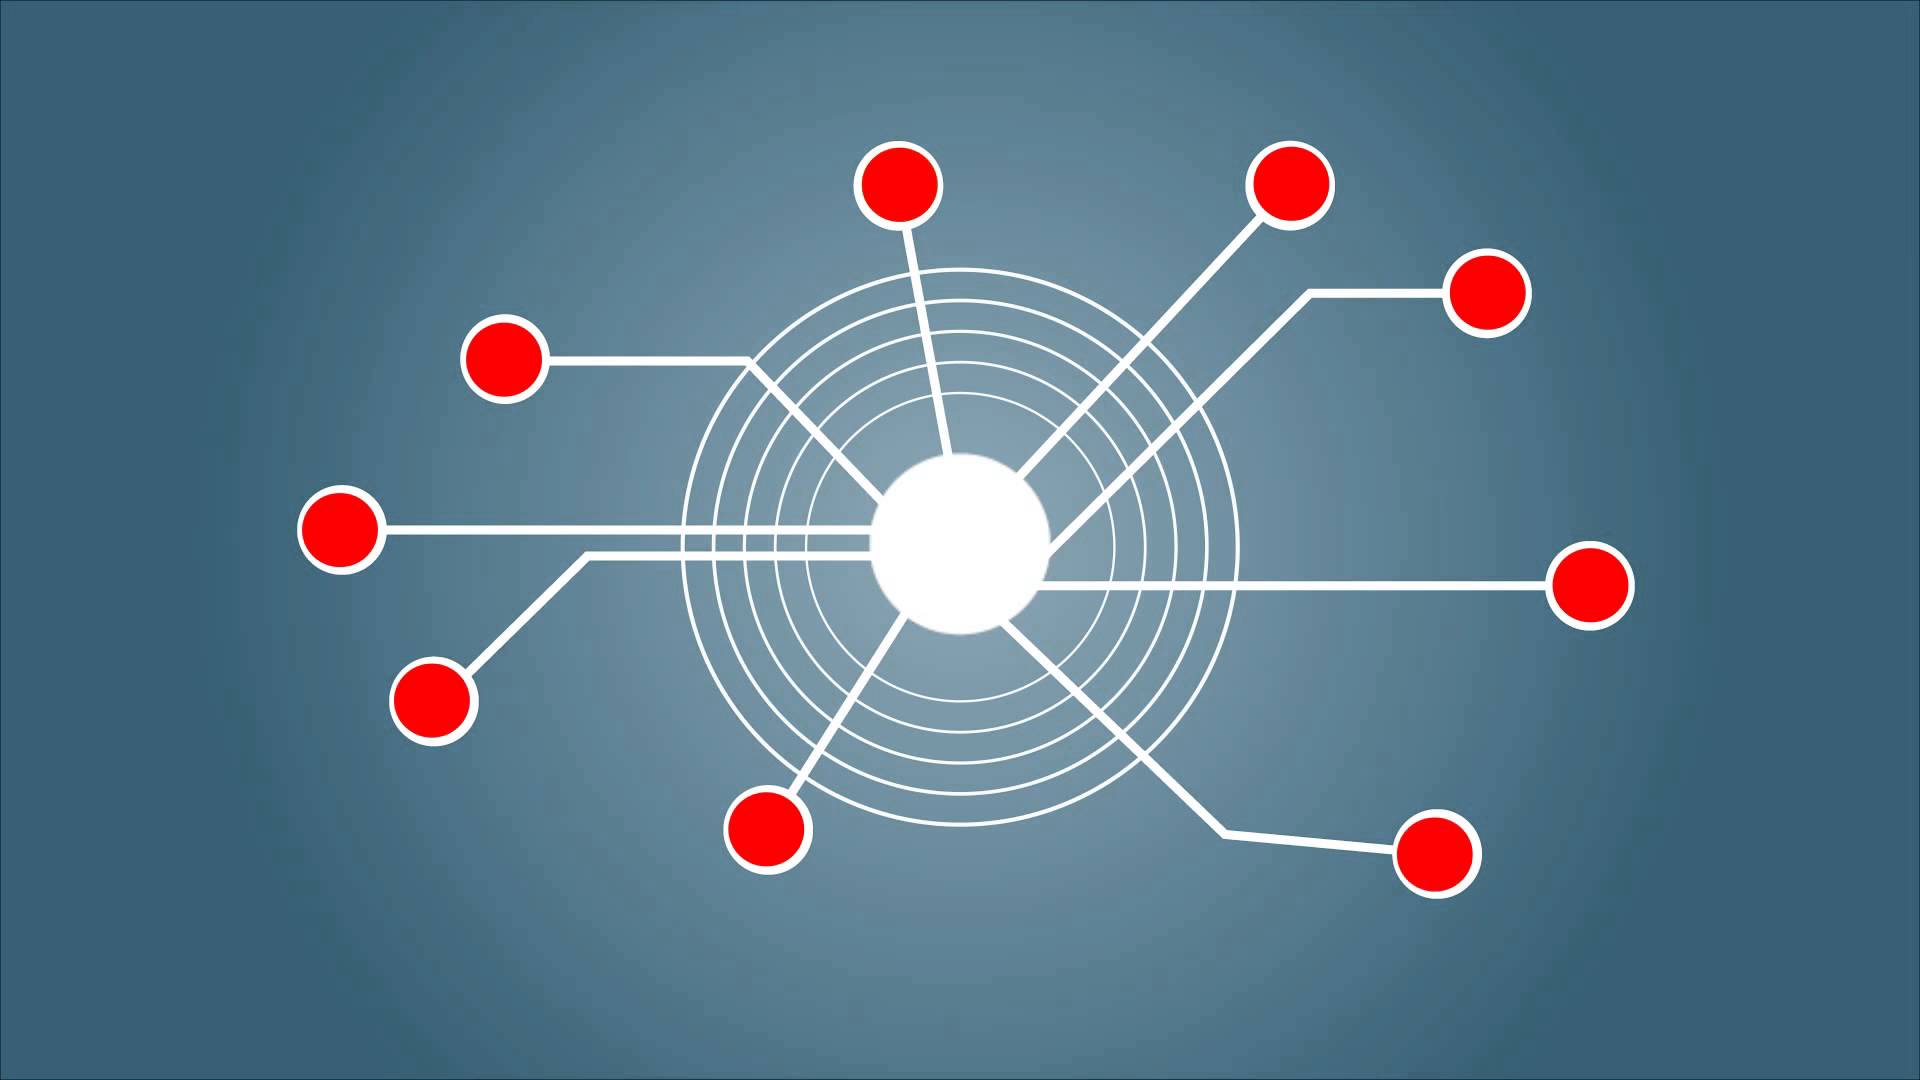 Wireless Network Wallpaper. Cartoon Network Wallpaper, Network Wallpaper and Network Diagram Wallpaper